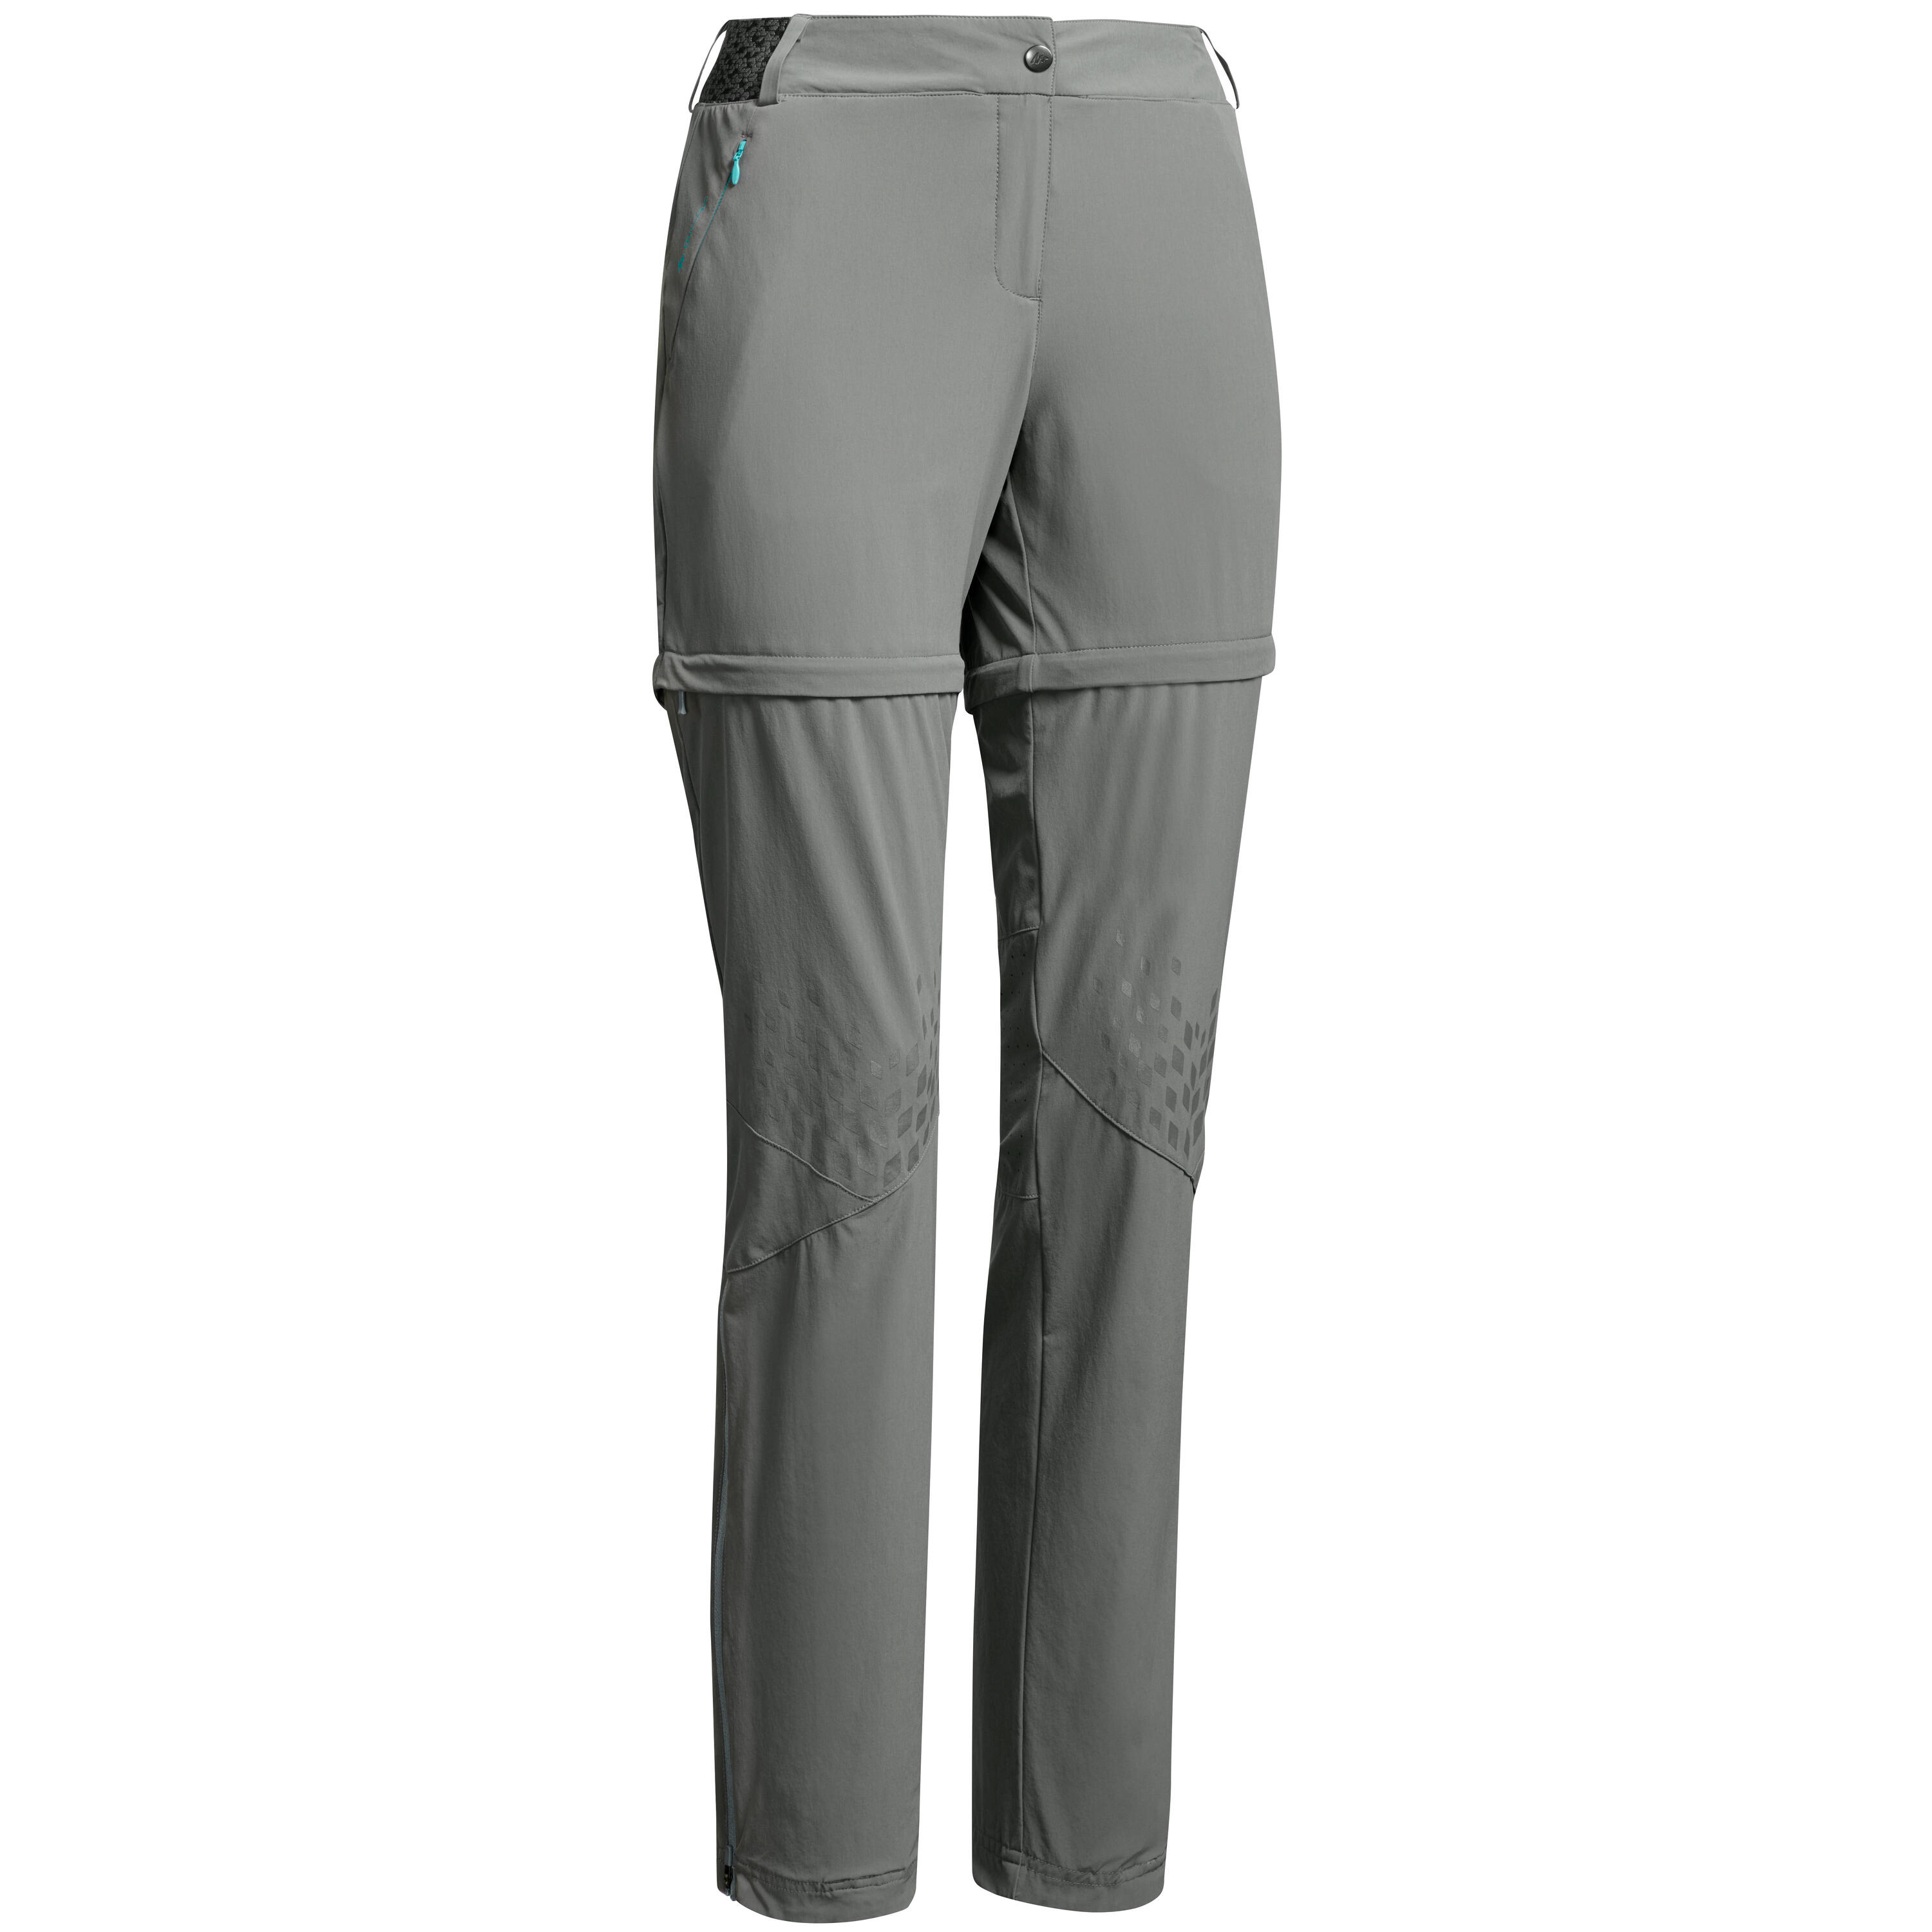 Women's convertible mountain hiking trousers - MH550 2/10